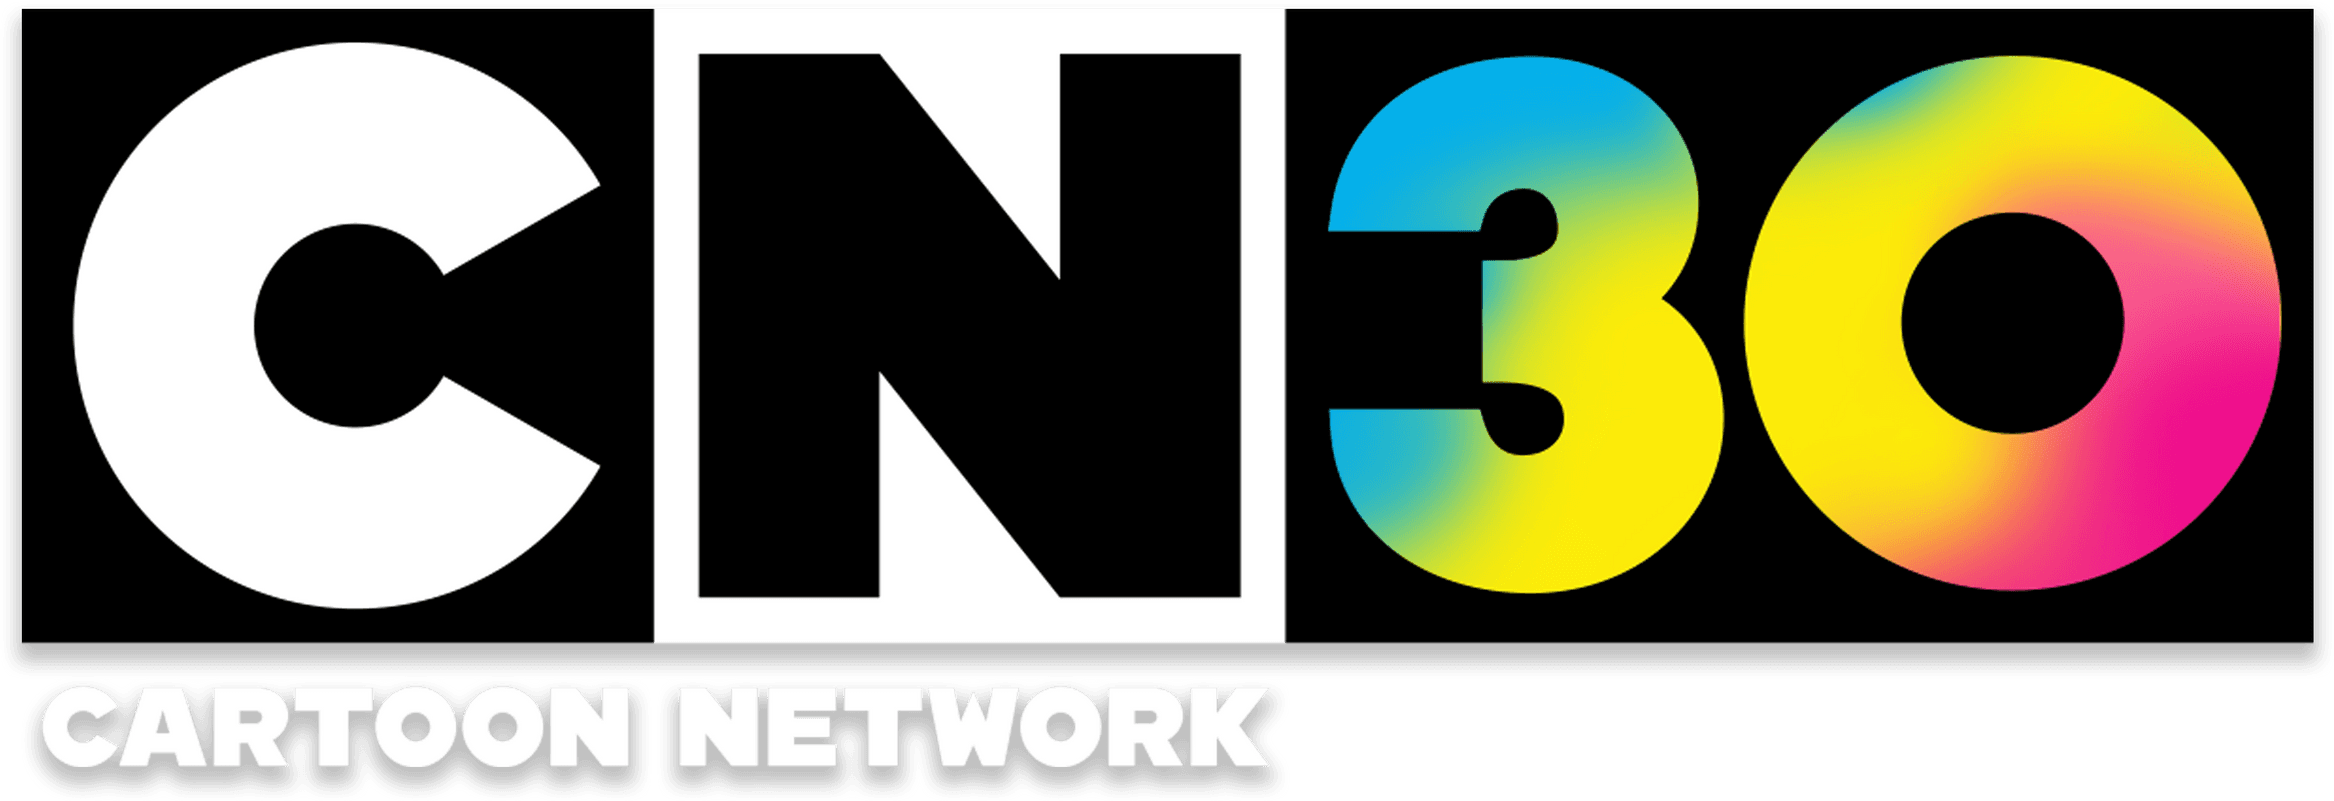 Cartoon Network: Animated Through the Years logo